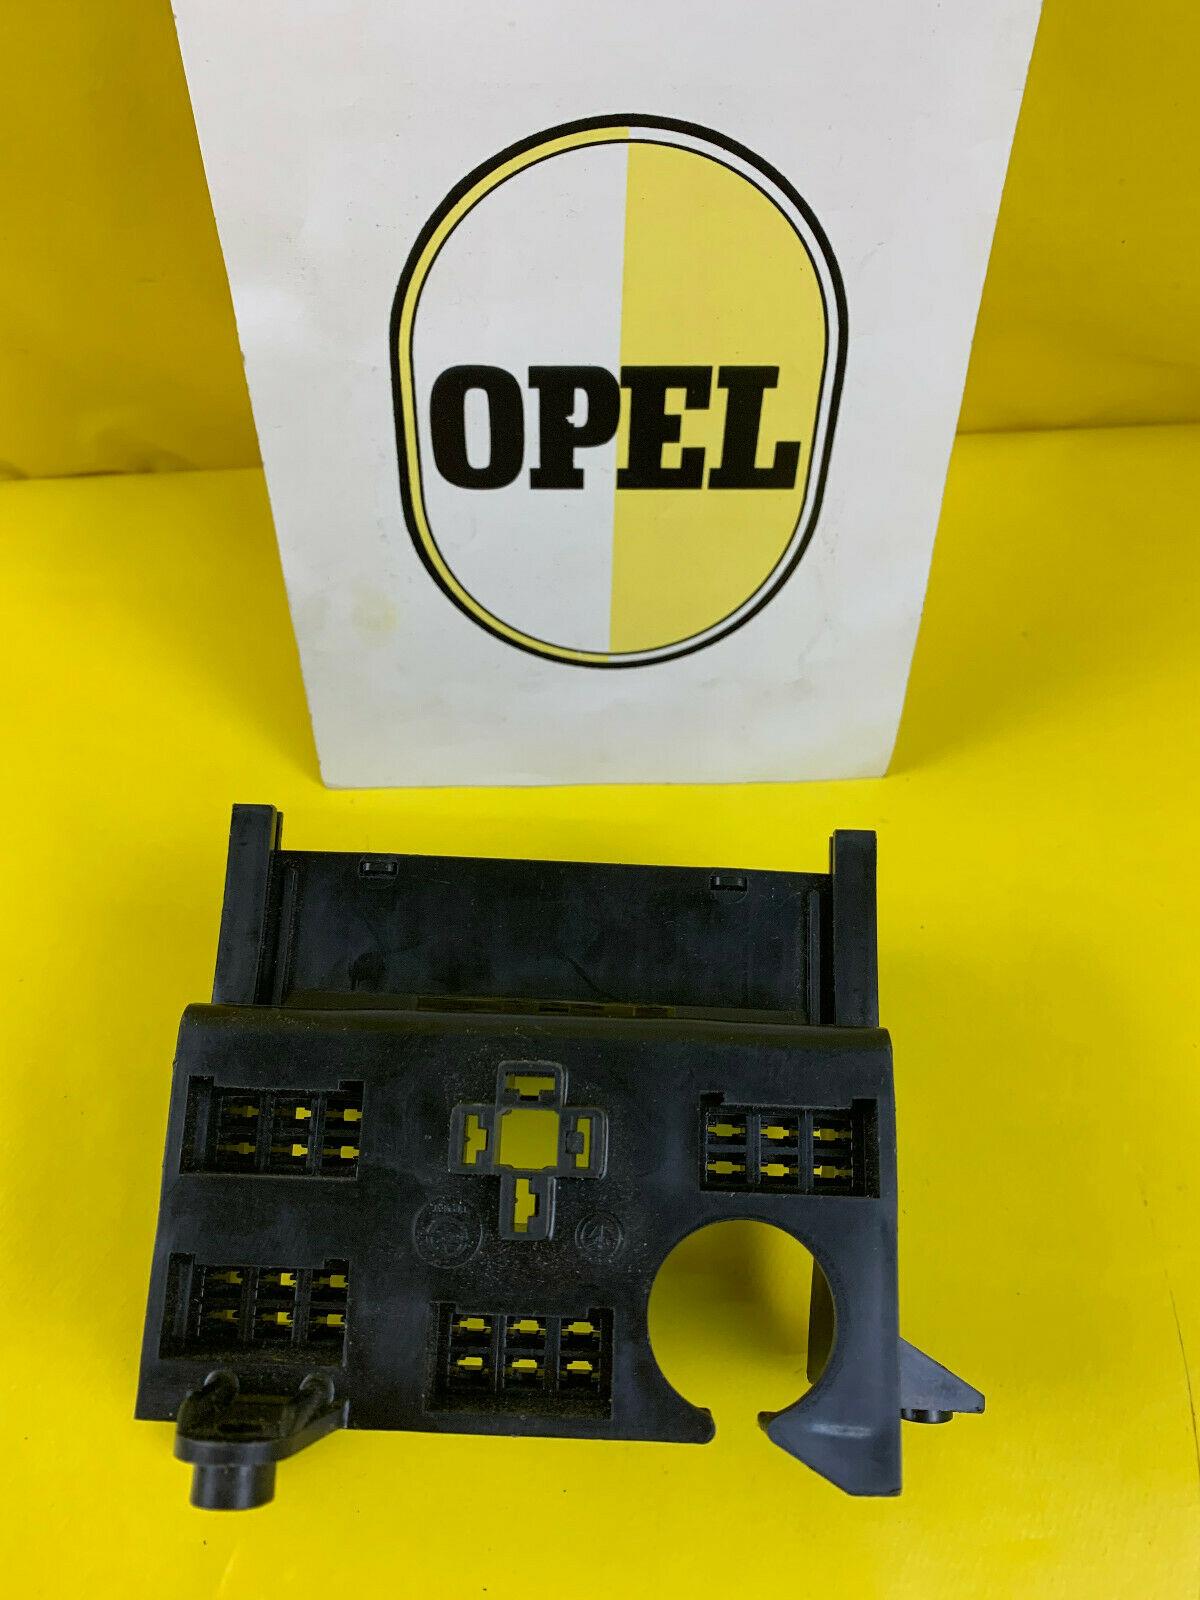 NEU + ORIGINAL Opel Rekord C Commodore A Deckel Sicherungskasten